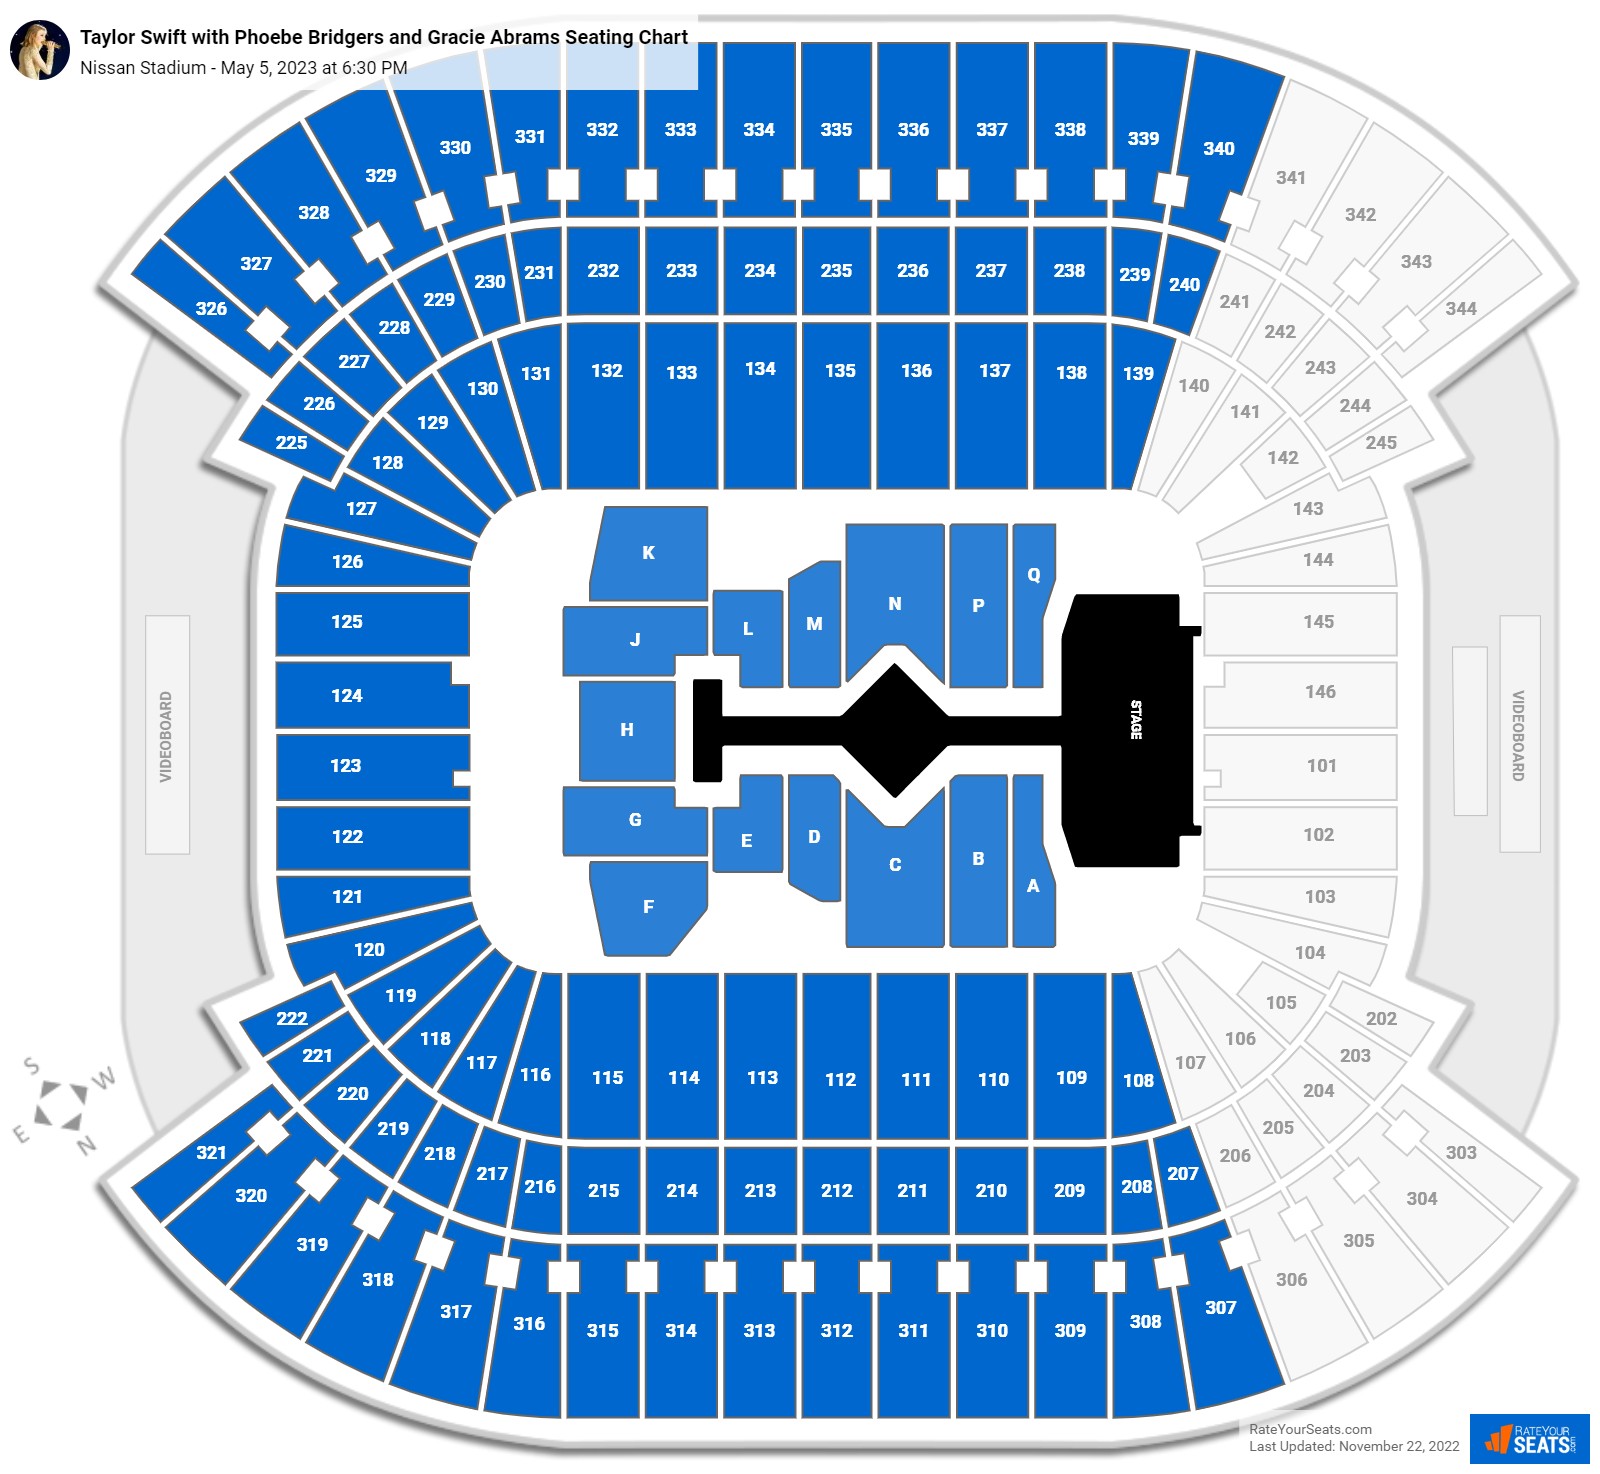 Nissan Stadium Concert Seating Chart - RateYourSeats.com